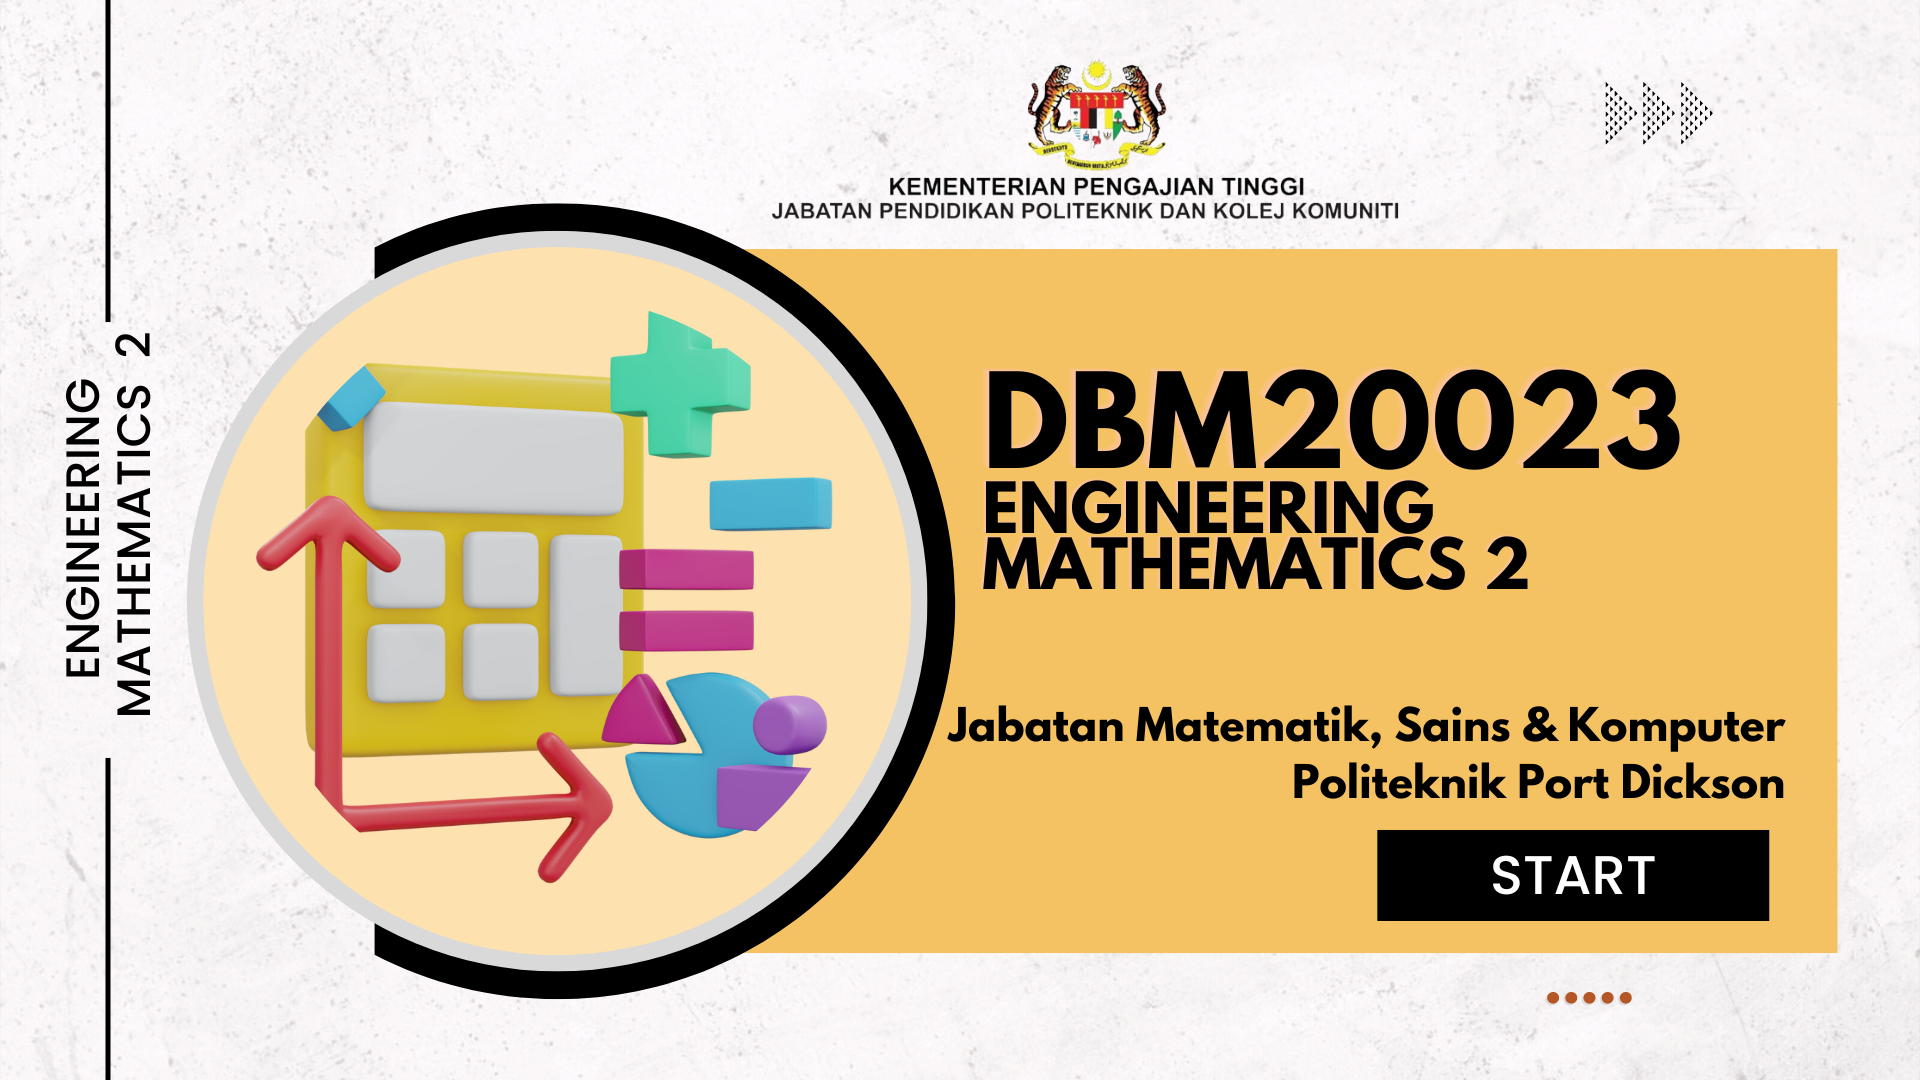 DBM20023 ENGINEERING MATHEMATICS 2